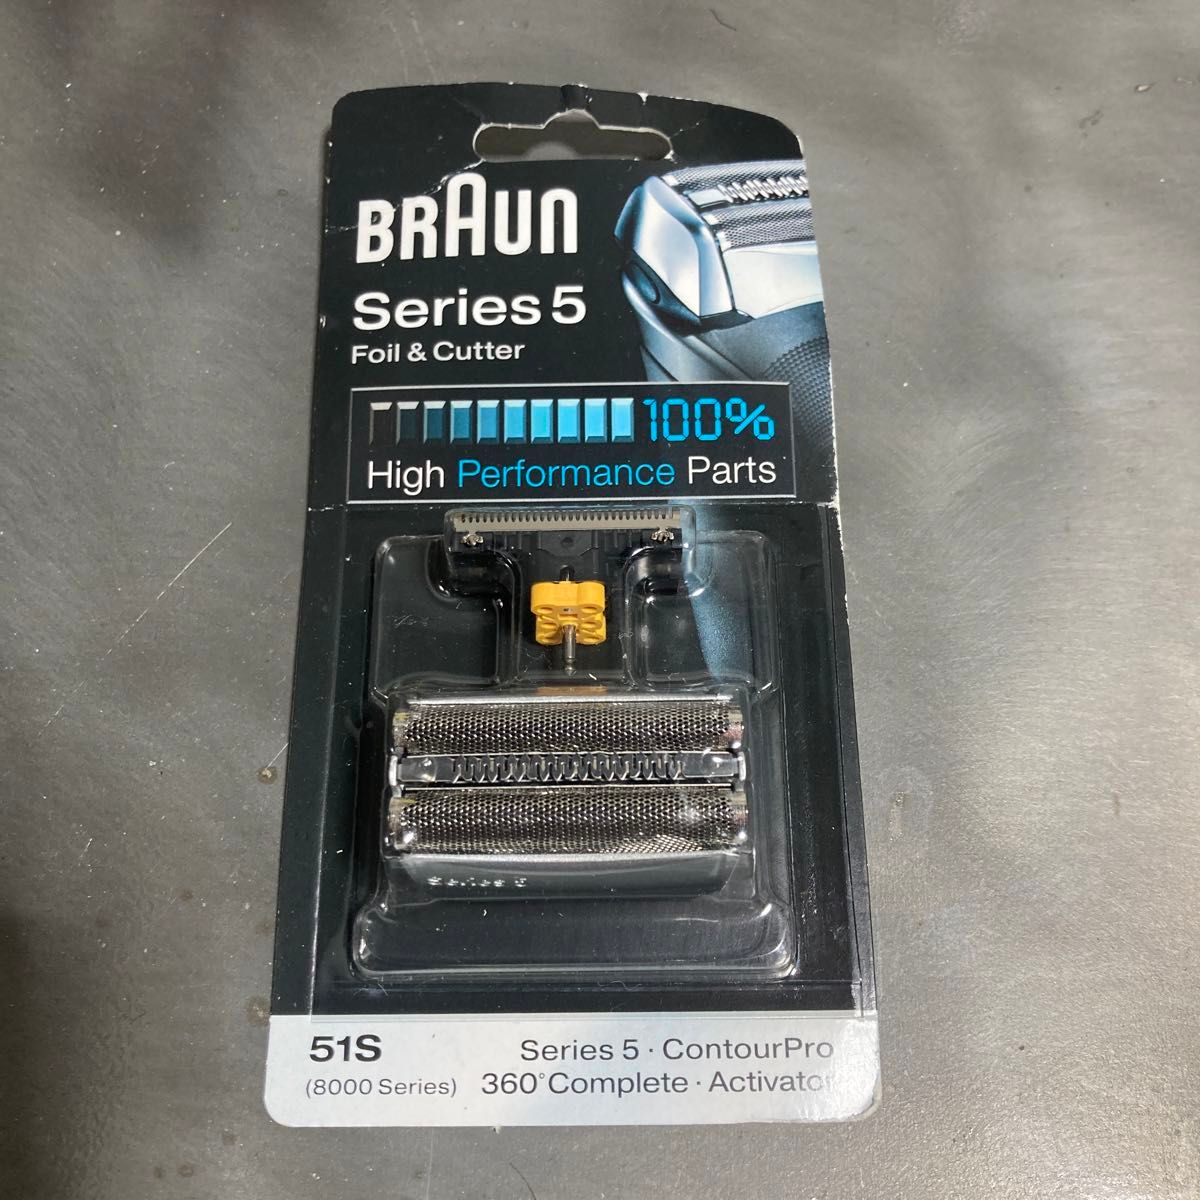 BRAUN ブラウン シリーズ5 8000シリーズ対応 網刃・内刃コンビパック 51S 並行輸入品